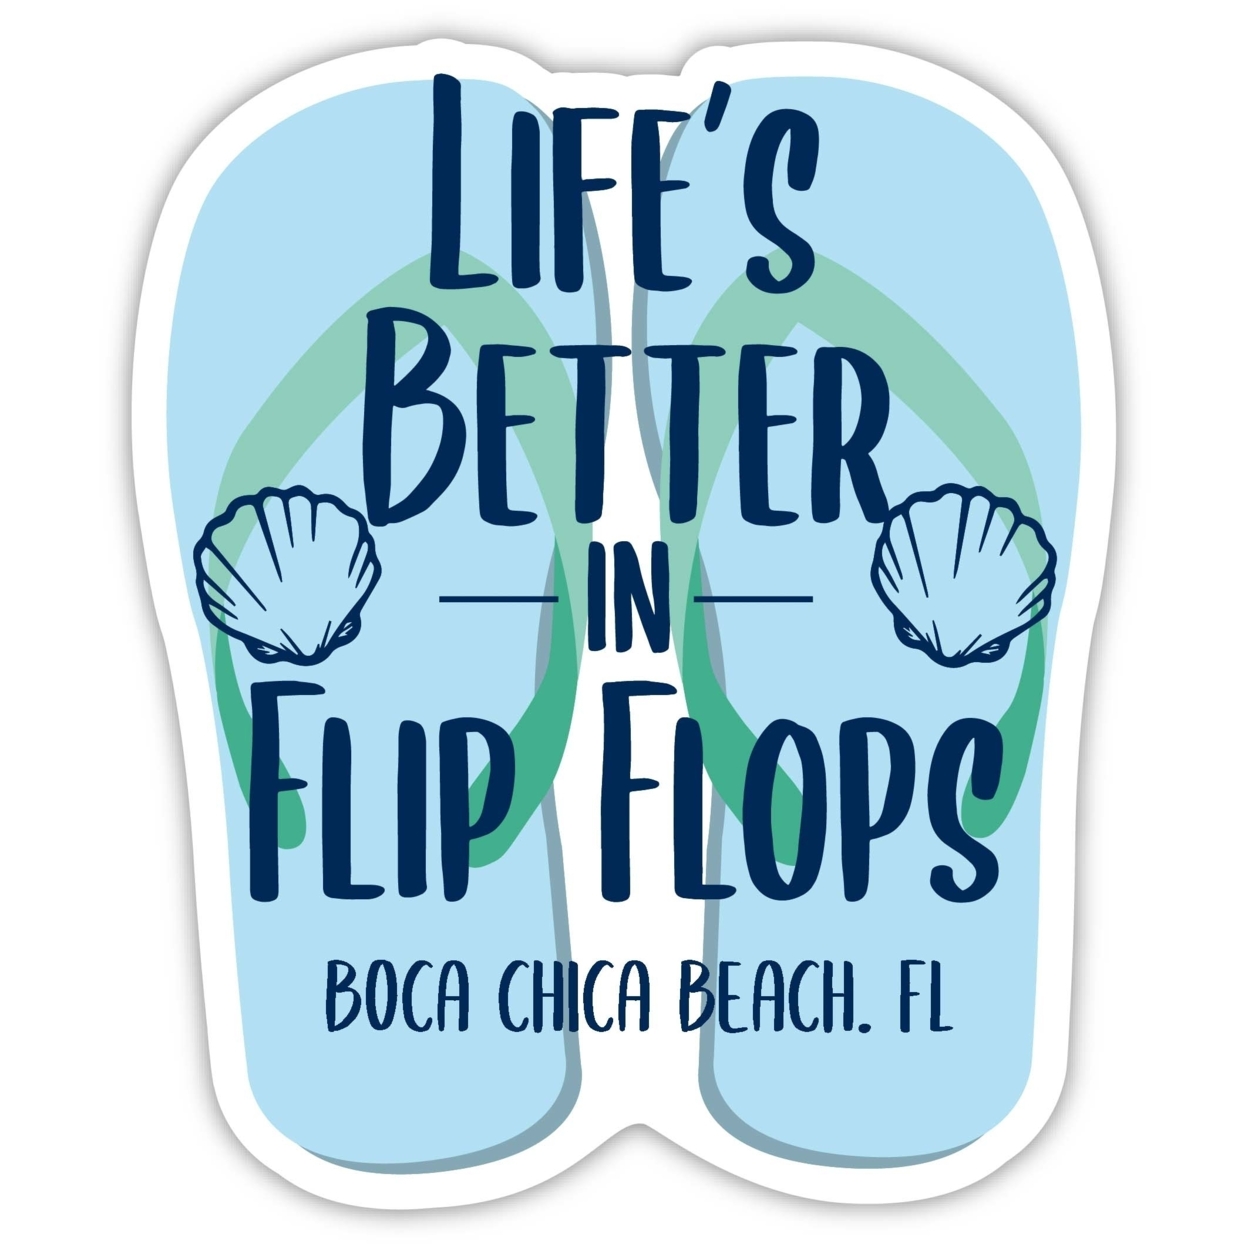 Boca Chica Beach Florida Souvenir 4 Inch Vinyl Decal Sticker Flip Flop Design